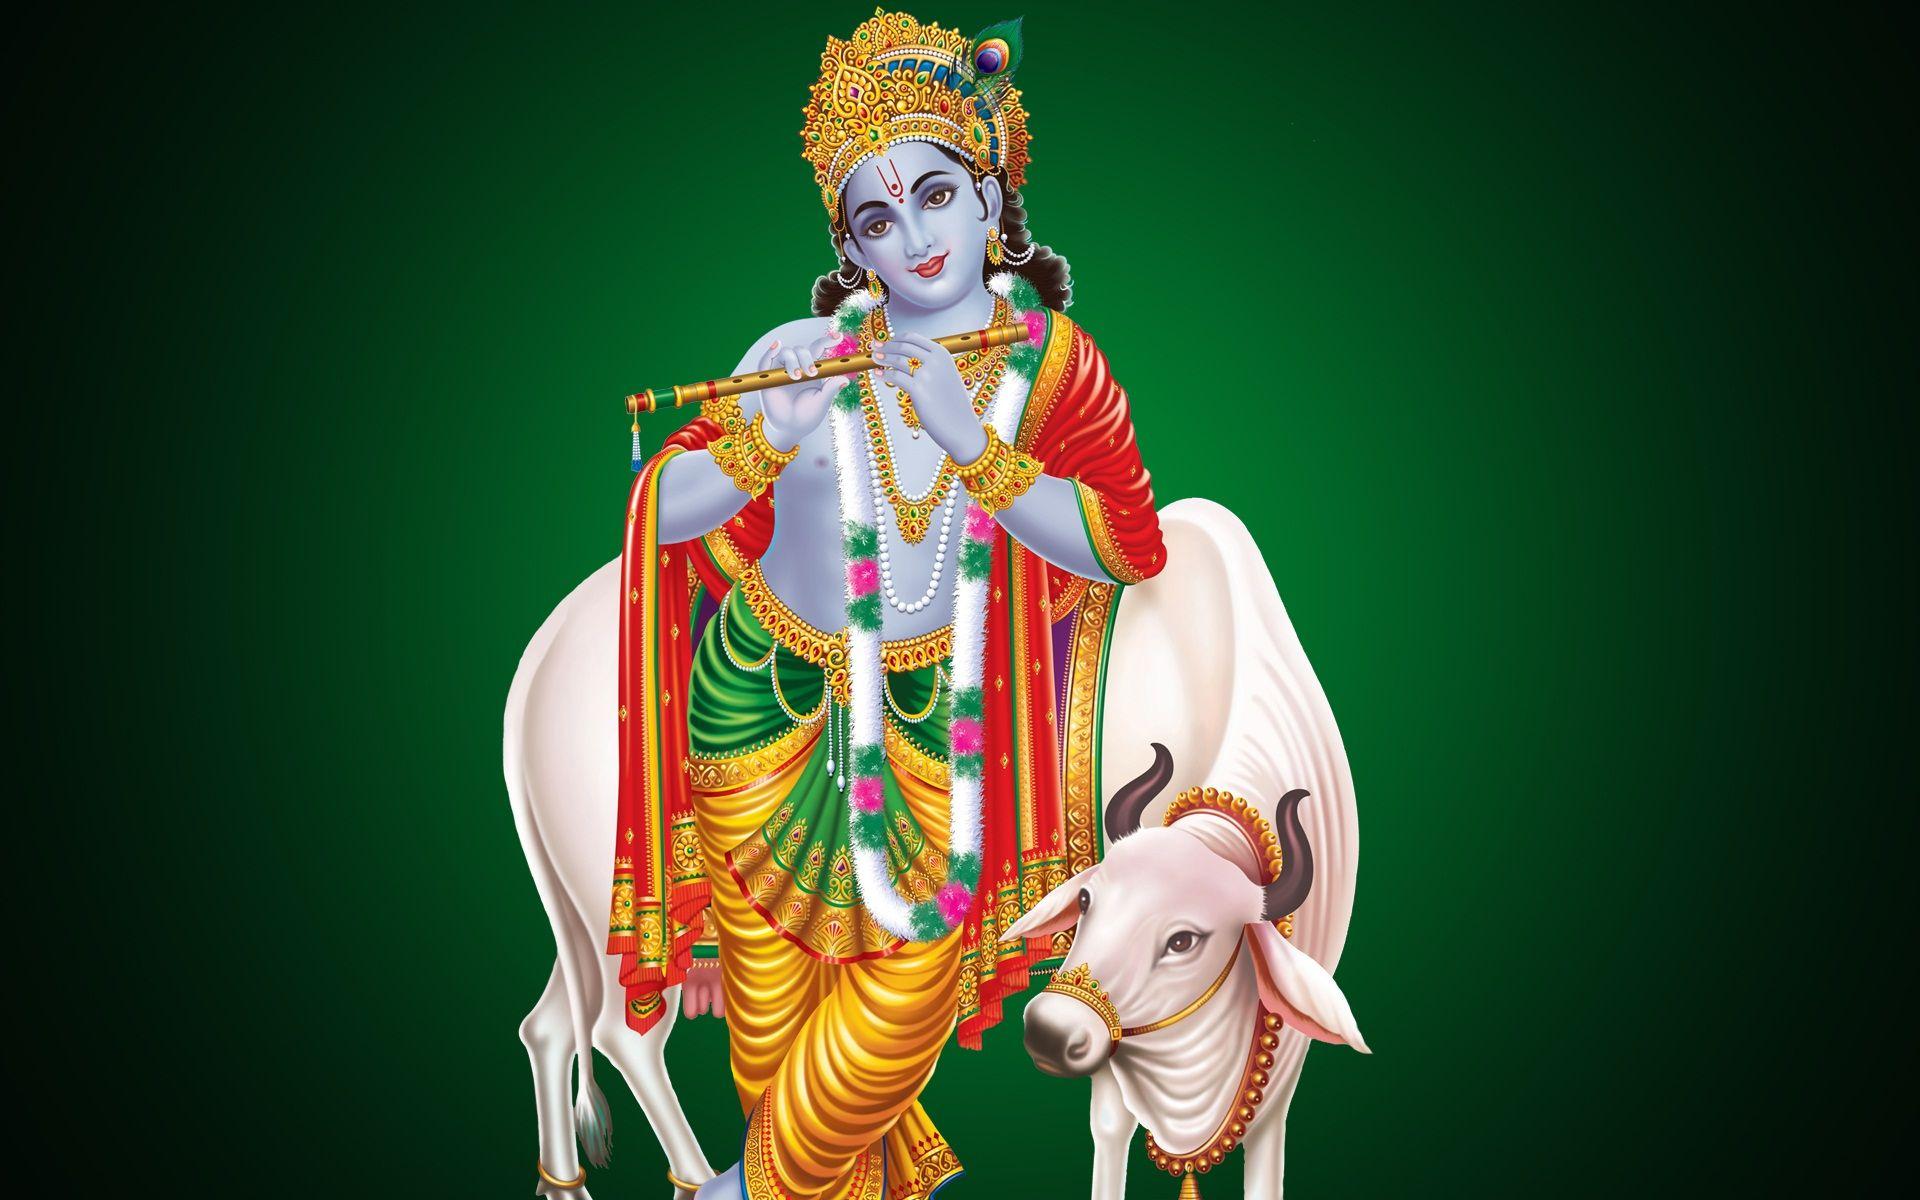 shri krishna wallpaper with cow. Free HD Wallpaper Download